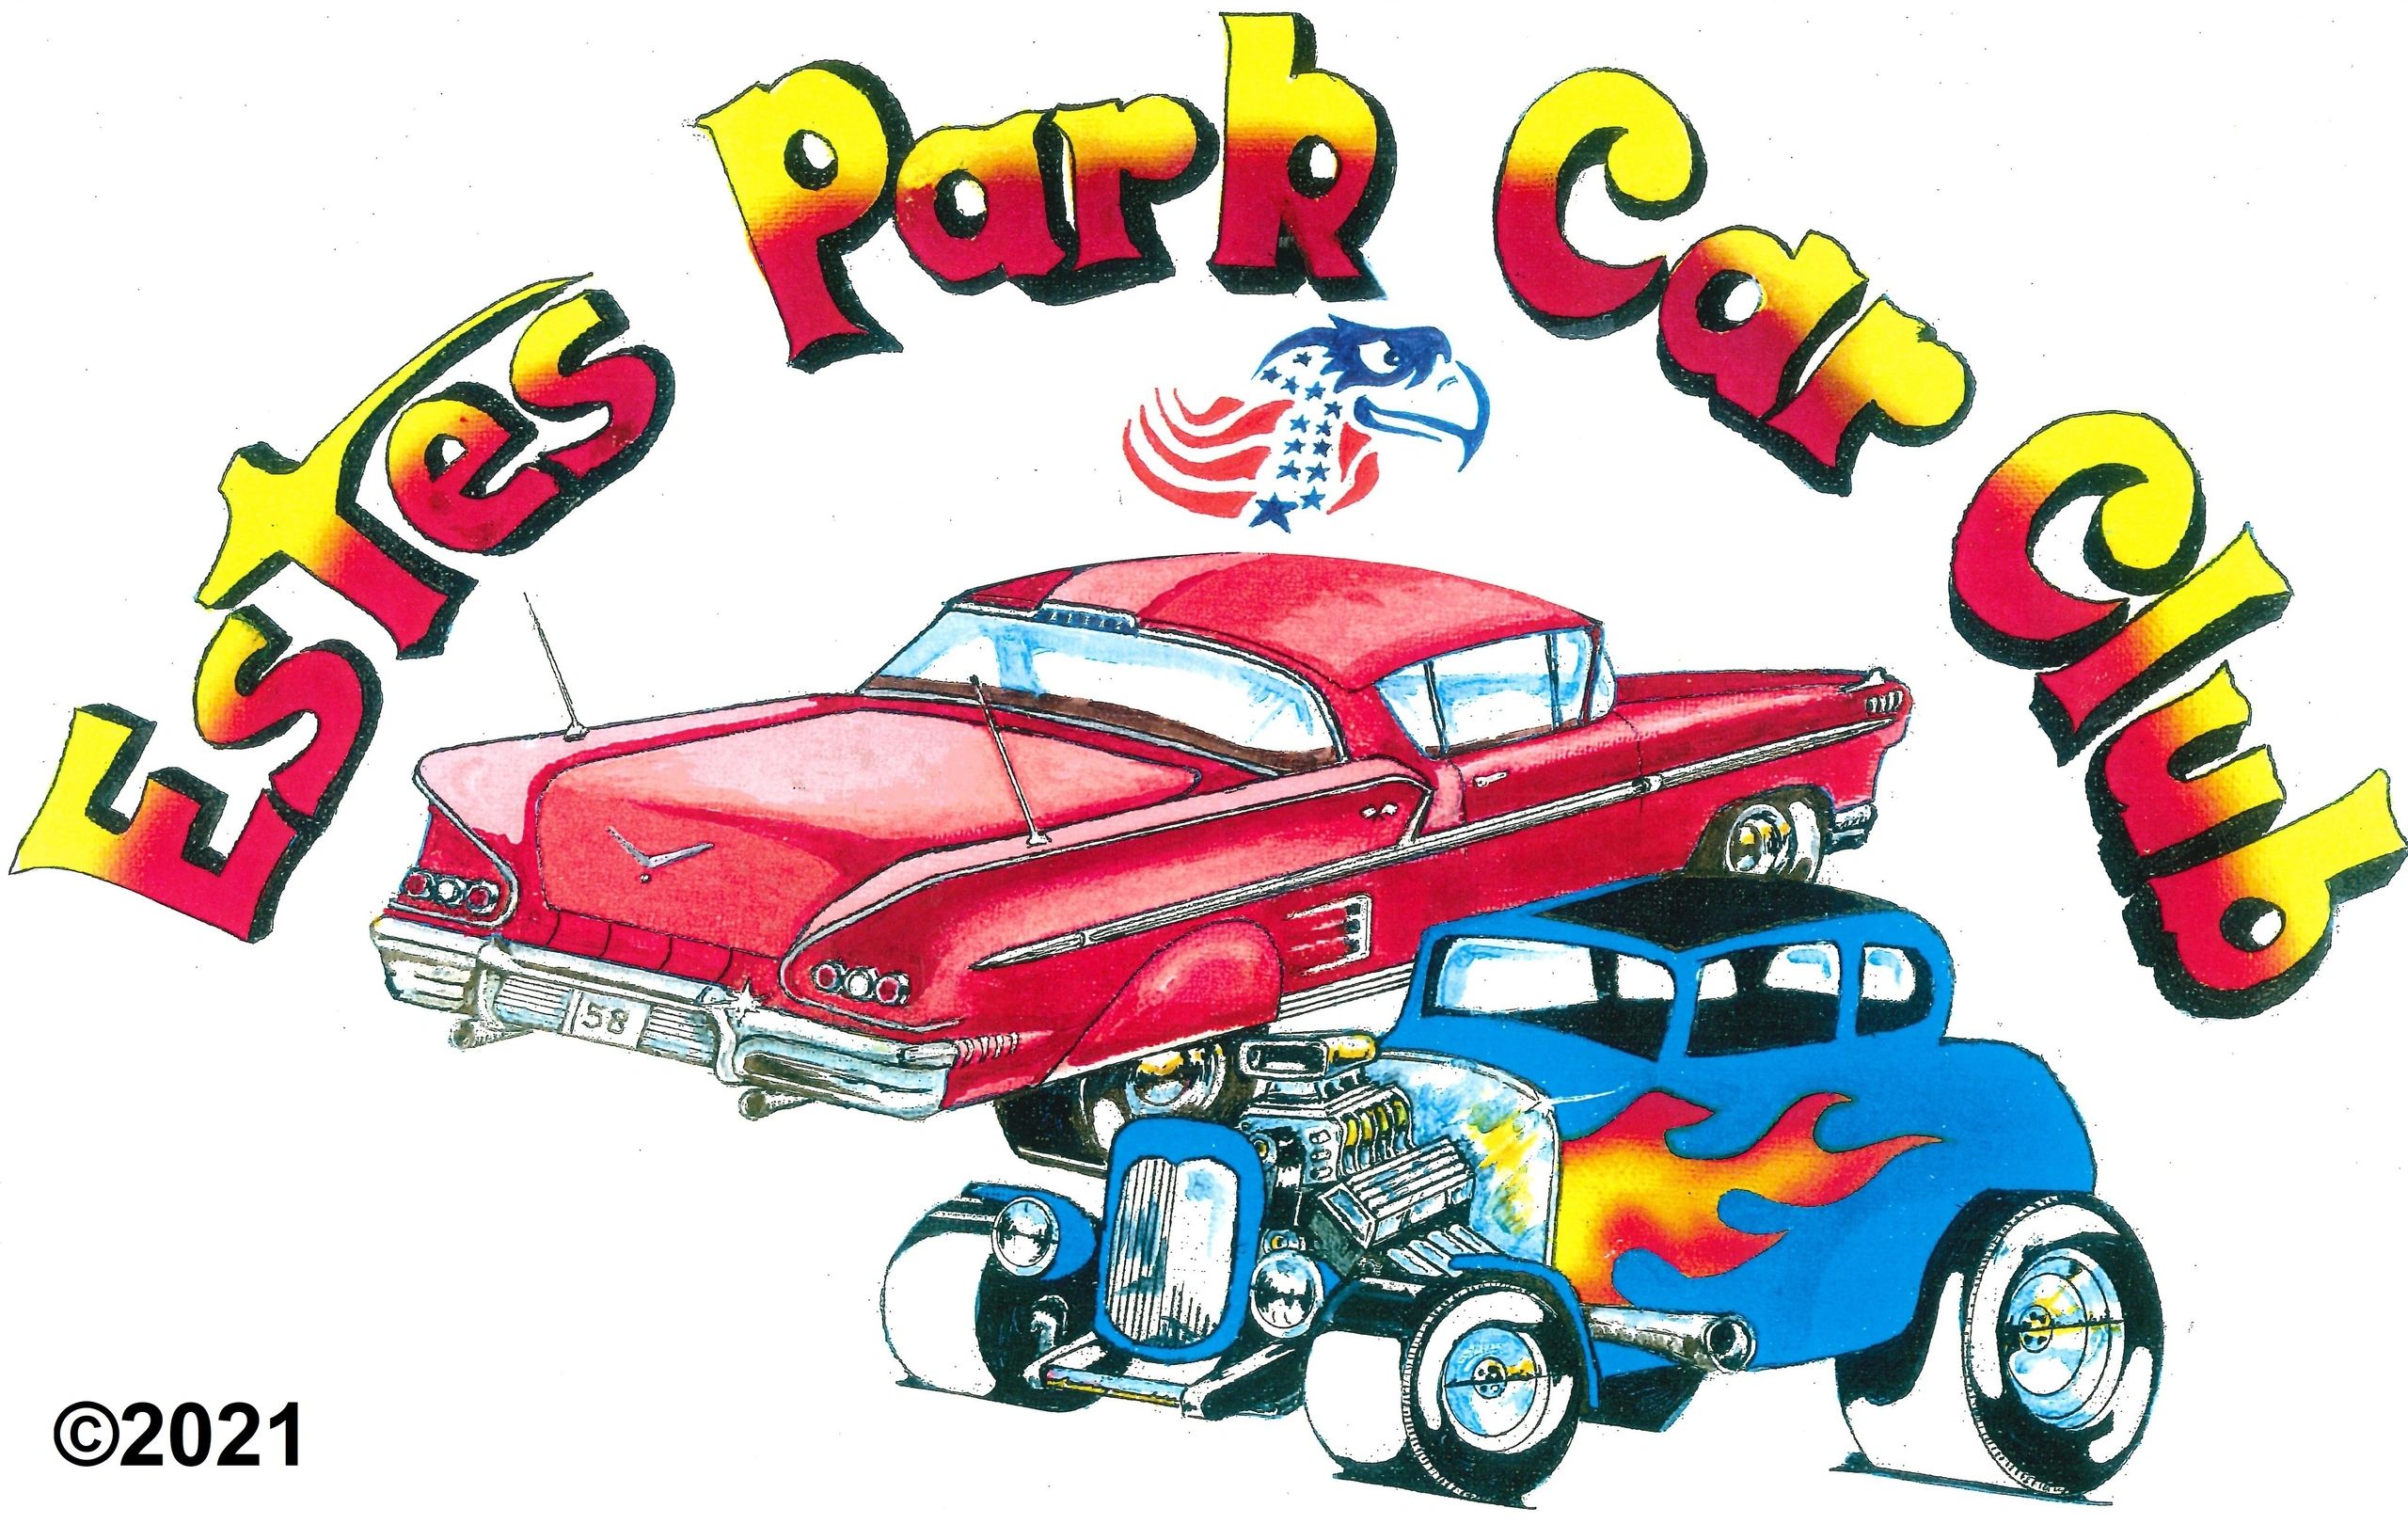 Estes Park Car Club